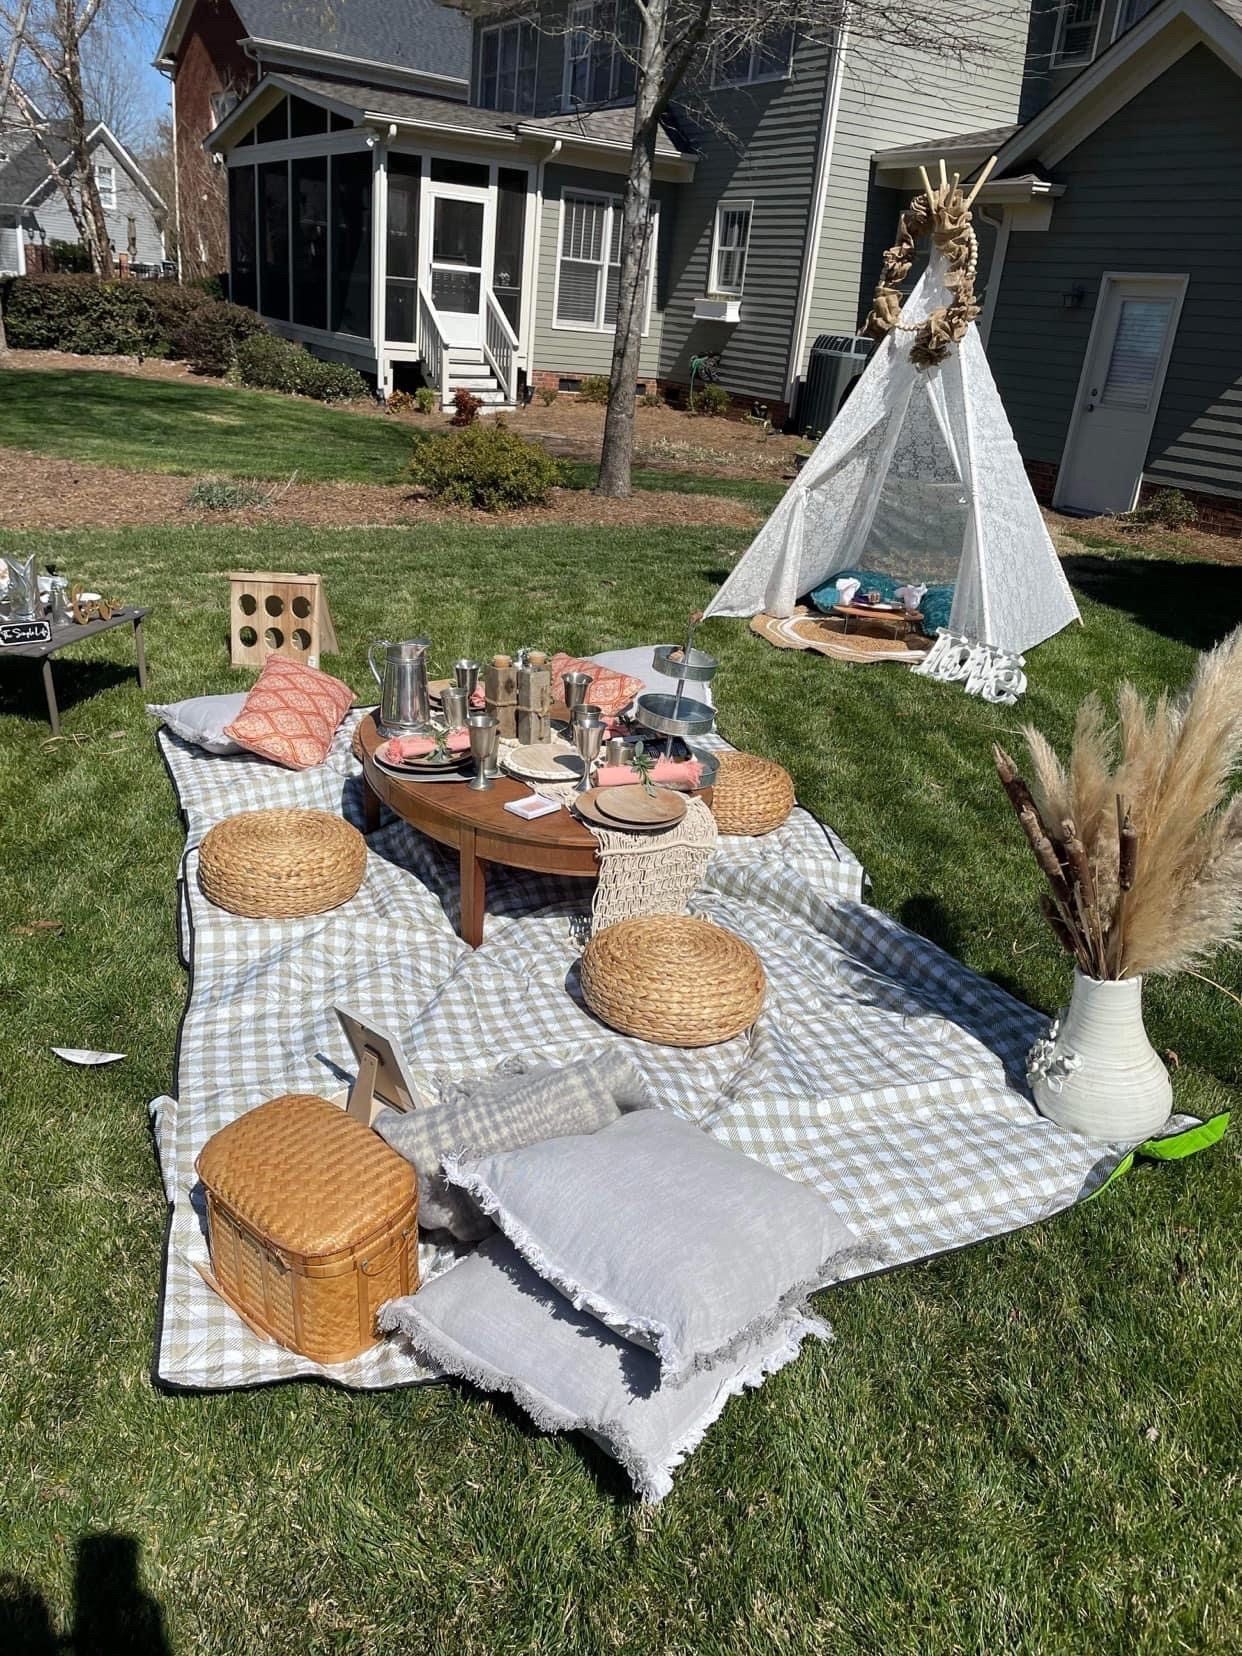 organized picnic spot